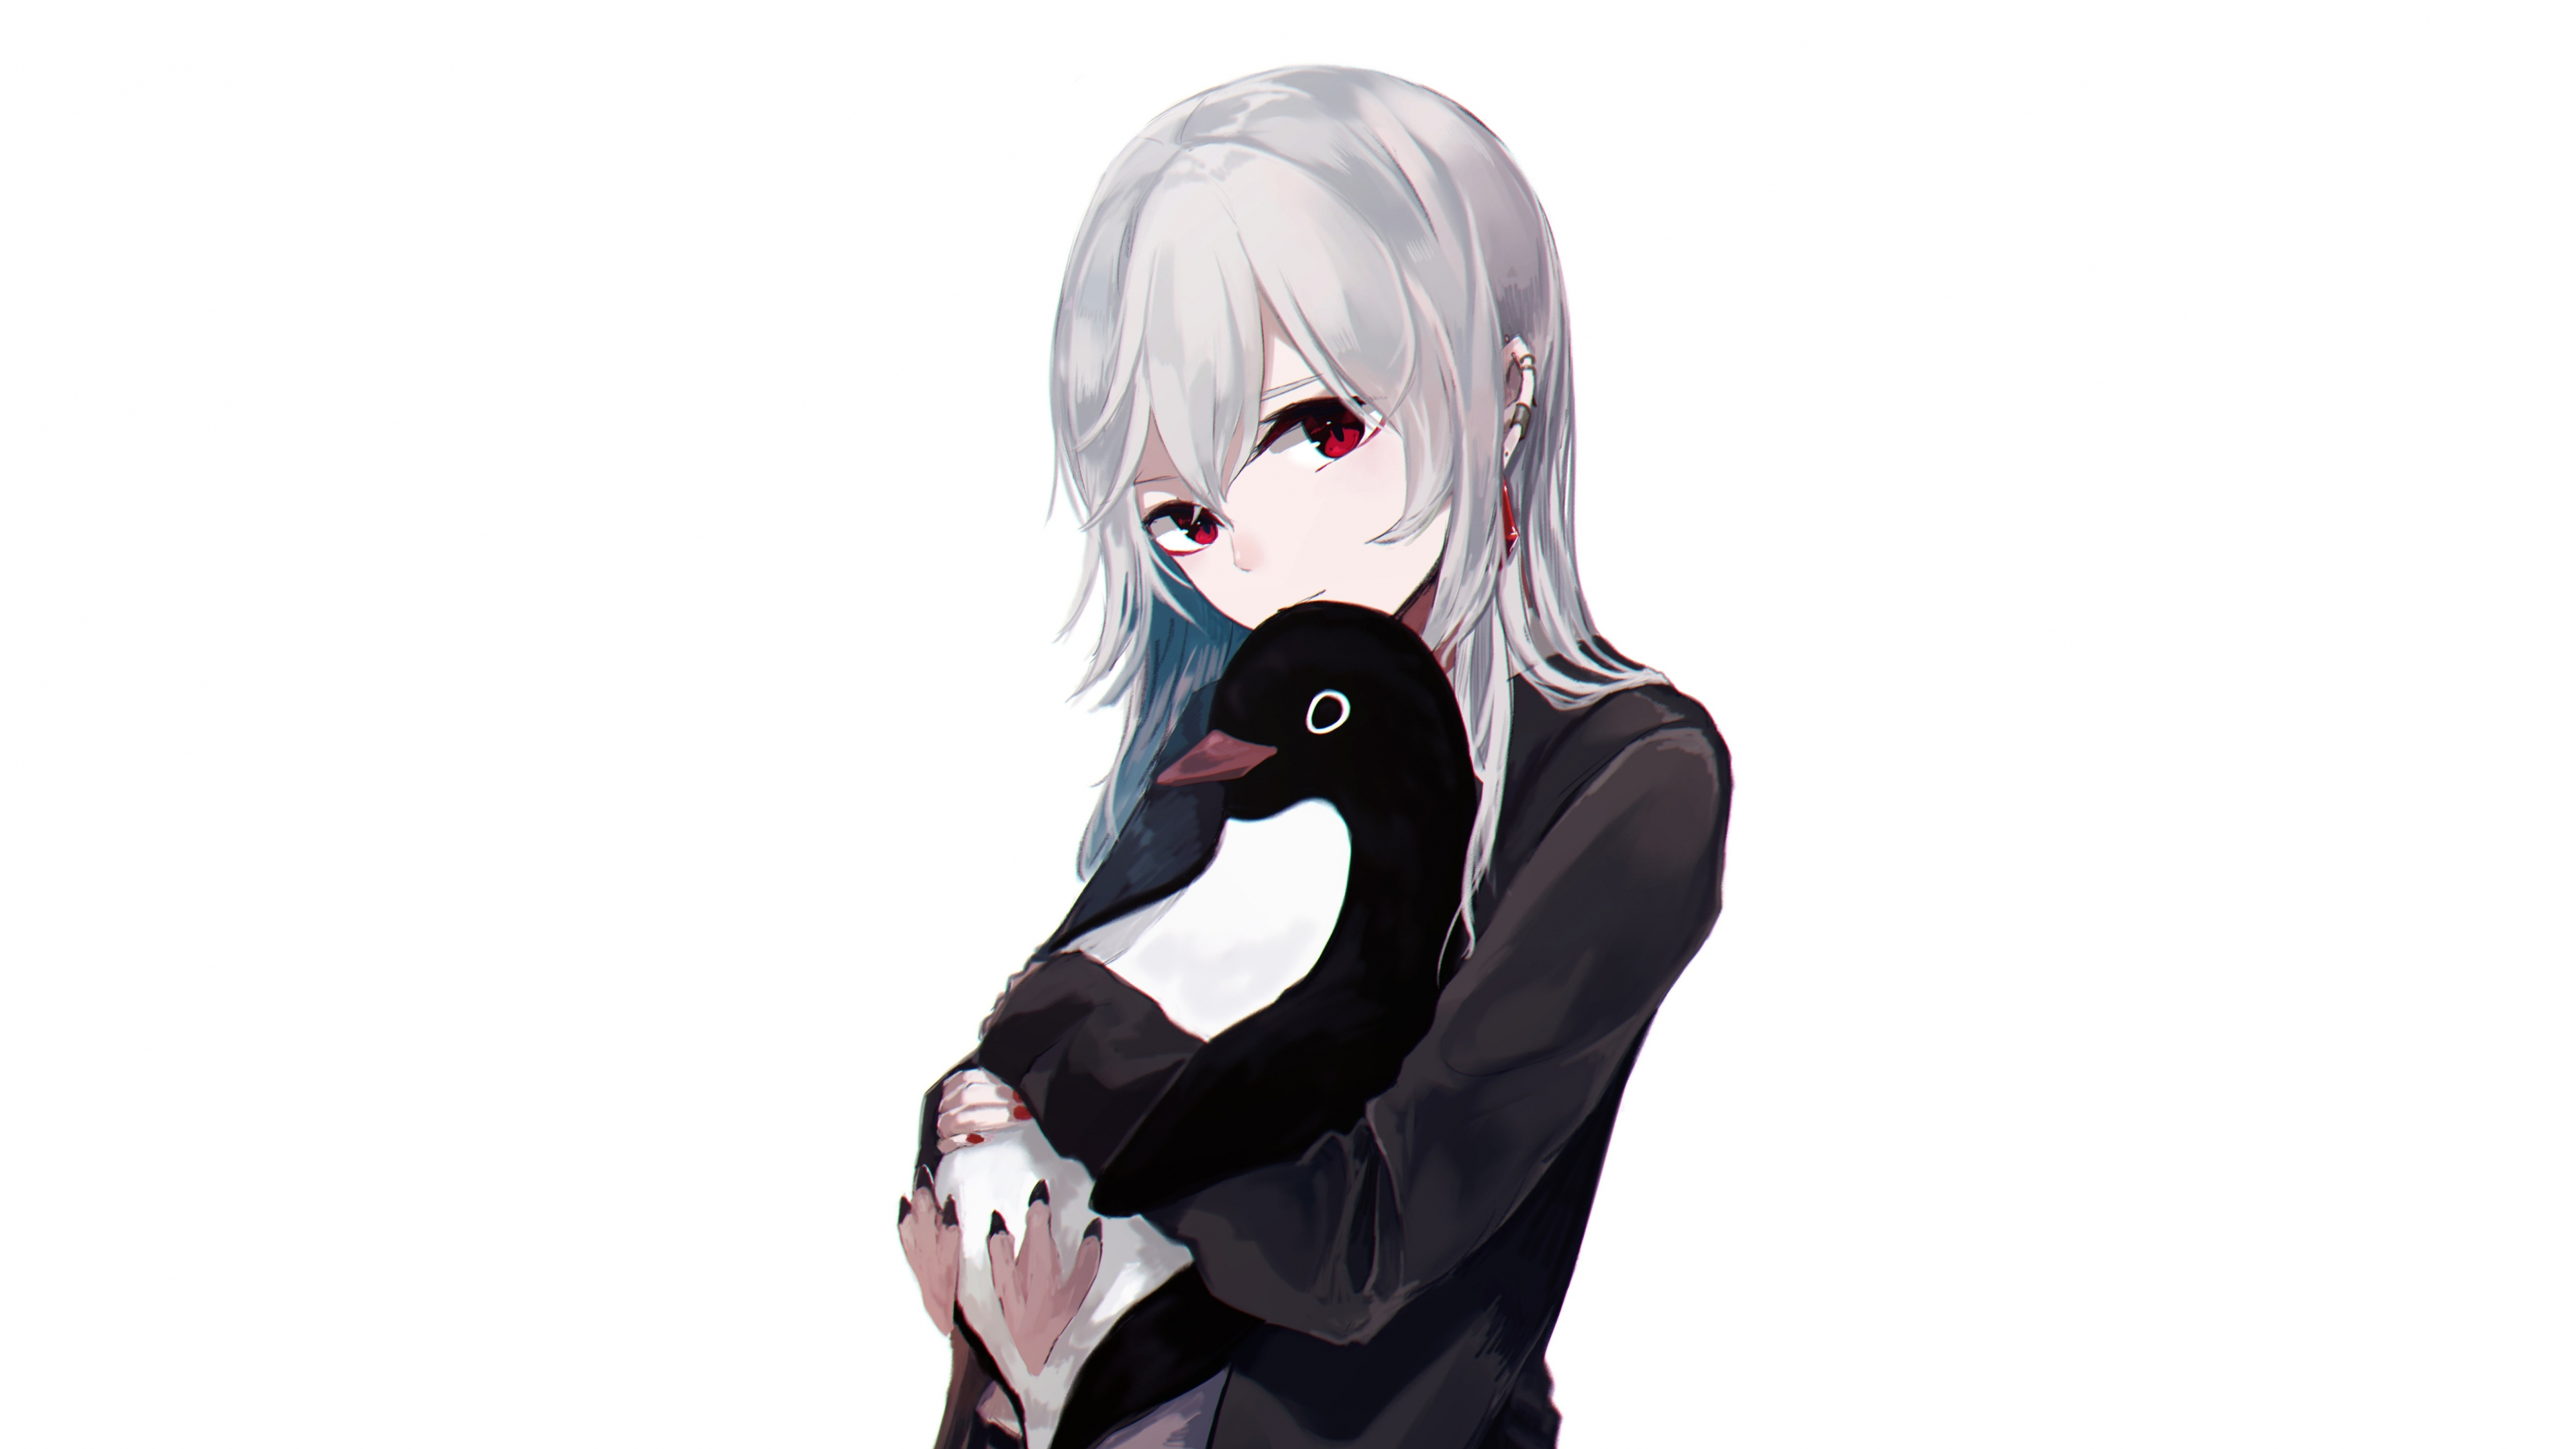 Download wallpaper 3840x2160 anime girl, cute, white hair, original,  penguin 4k wallpaper, uhd wallpaper, 16:9 widescreen 3840x2160 hd  background, 5871